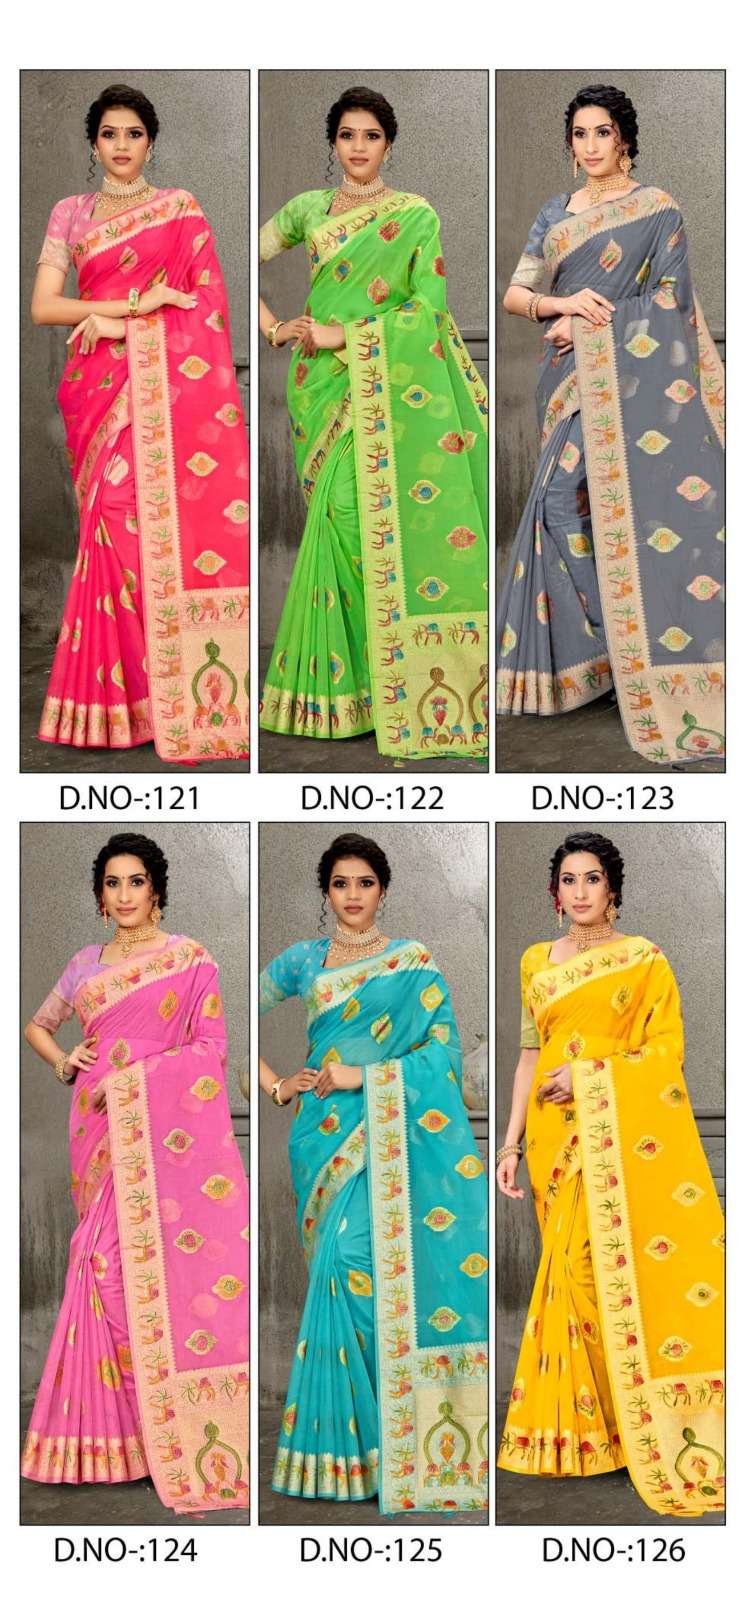 Ynf Indian Organza Woven Designer Saree Wholesale catalog